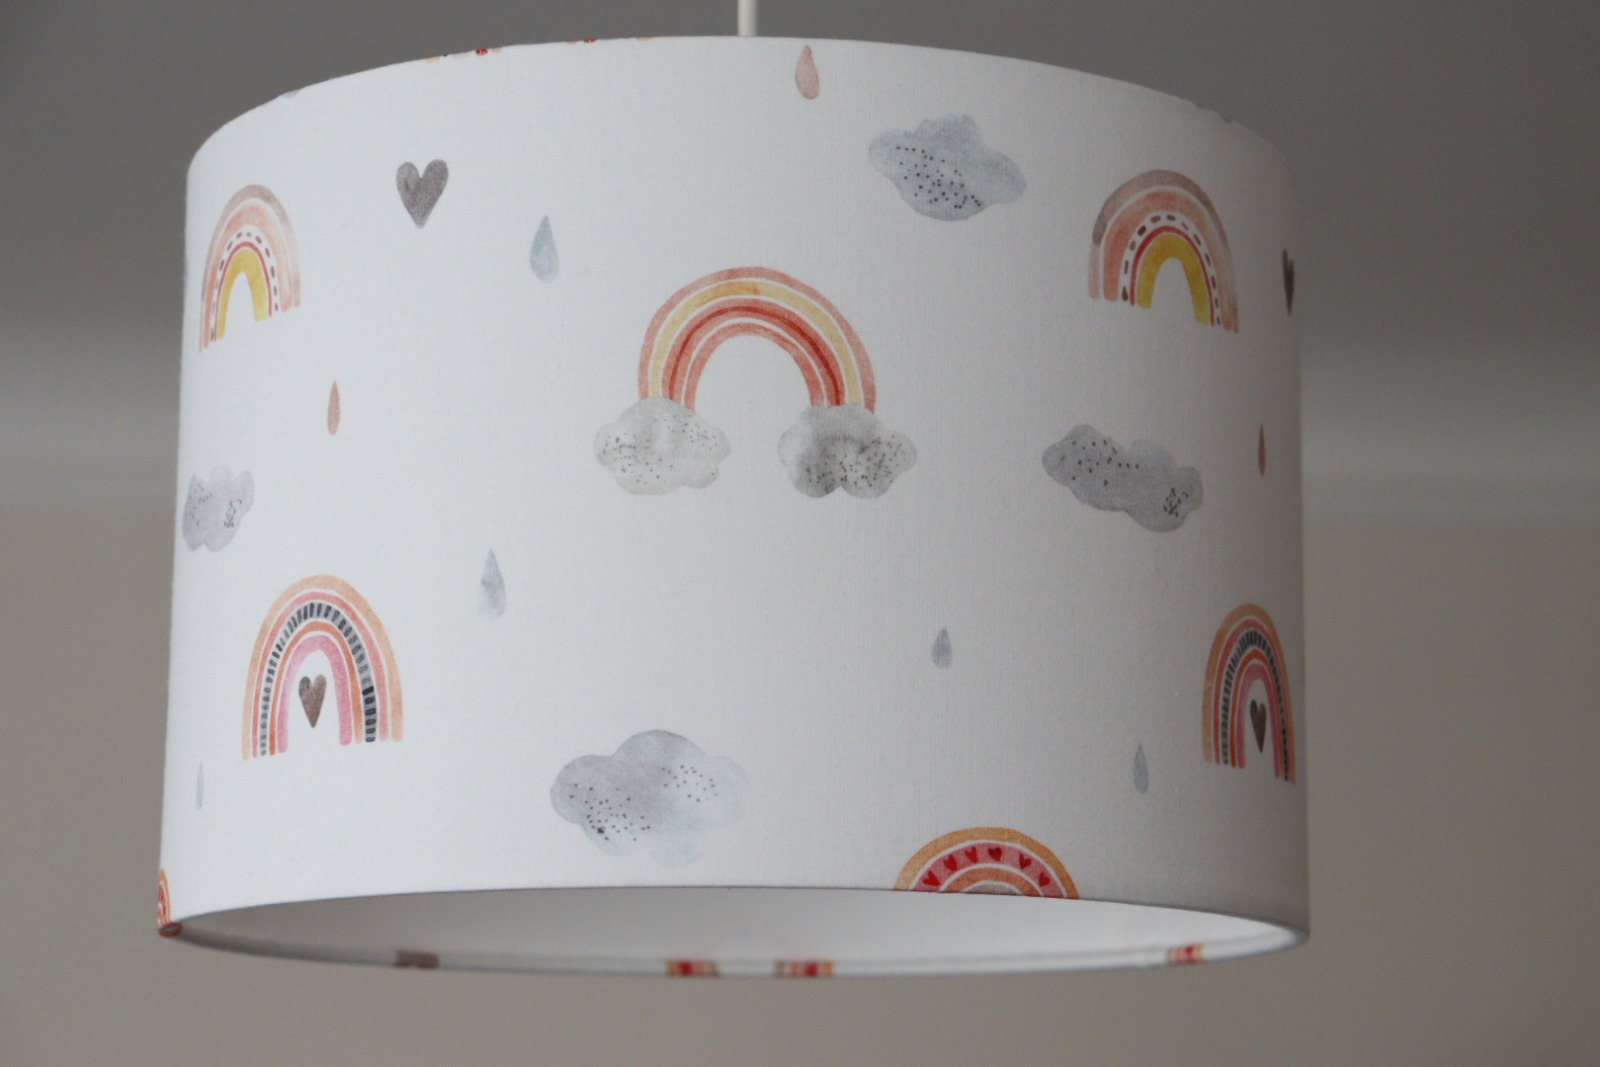 Lampenschirm Kinderzimmer Lampe Regenbogen Kinderlampe mit Herzen und Wolken Kinderzimmerlampe